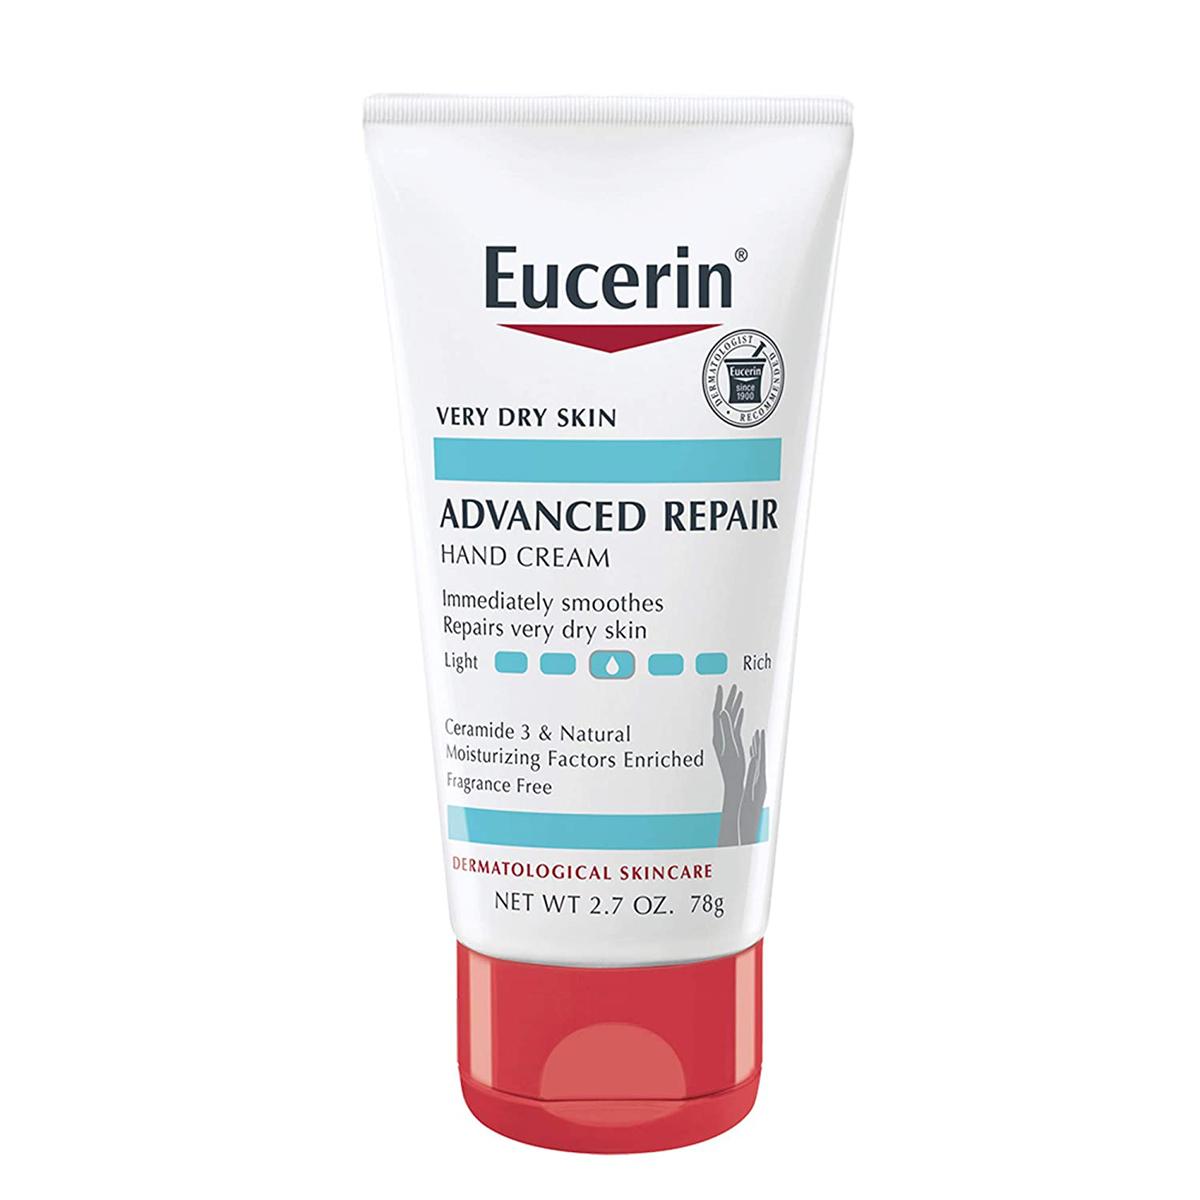 2x Eucerin Advanced Repair Hand Cream for $5.12 Shipped